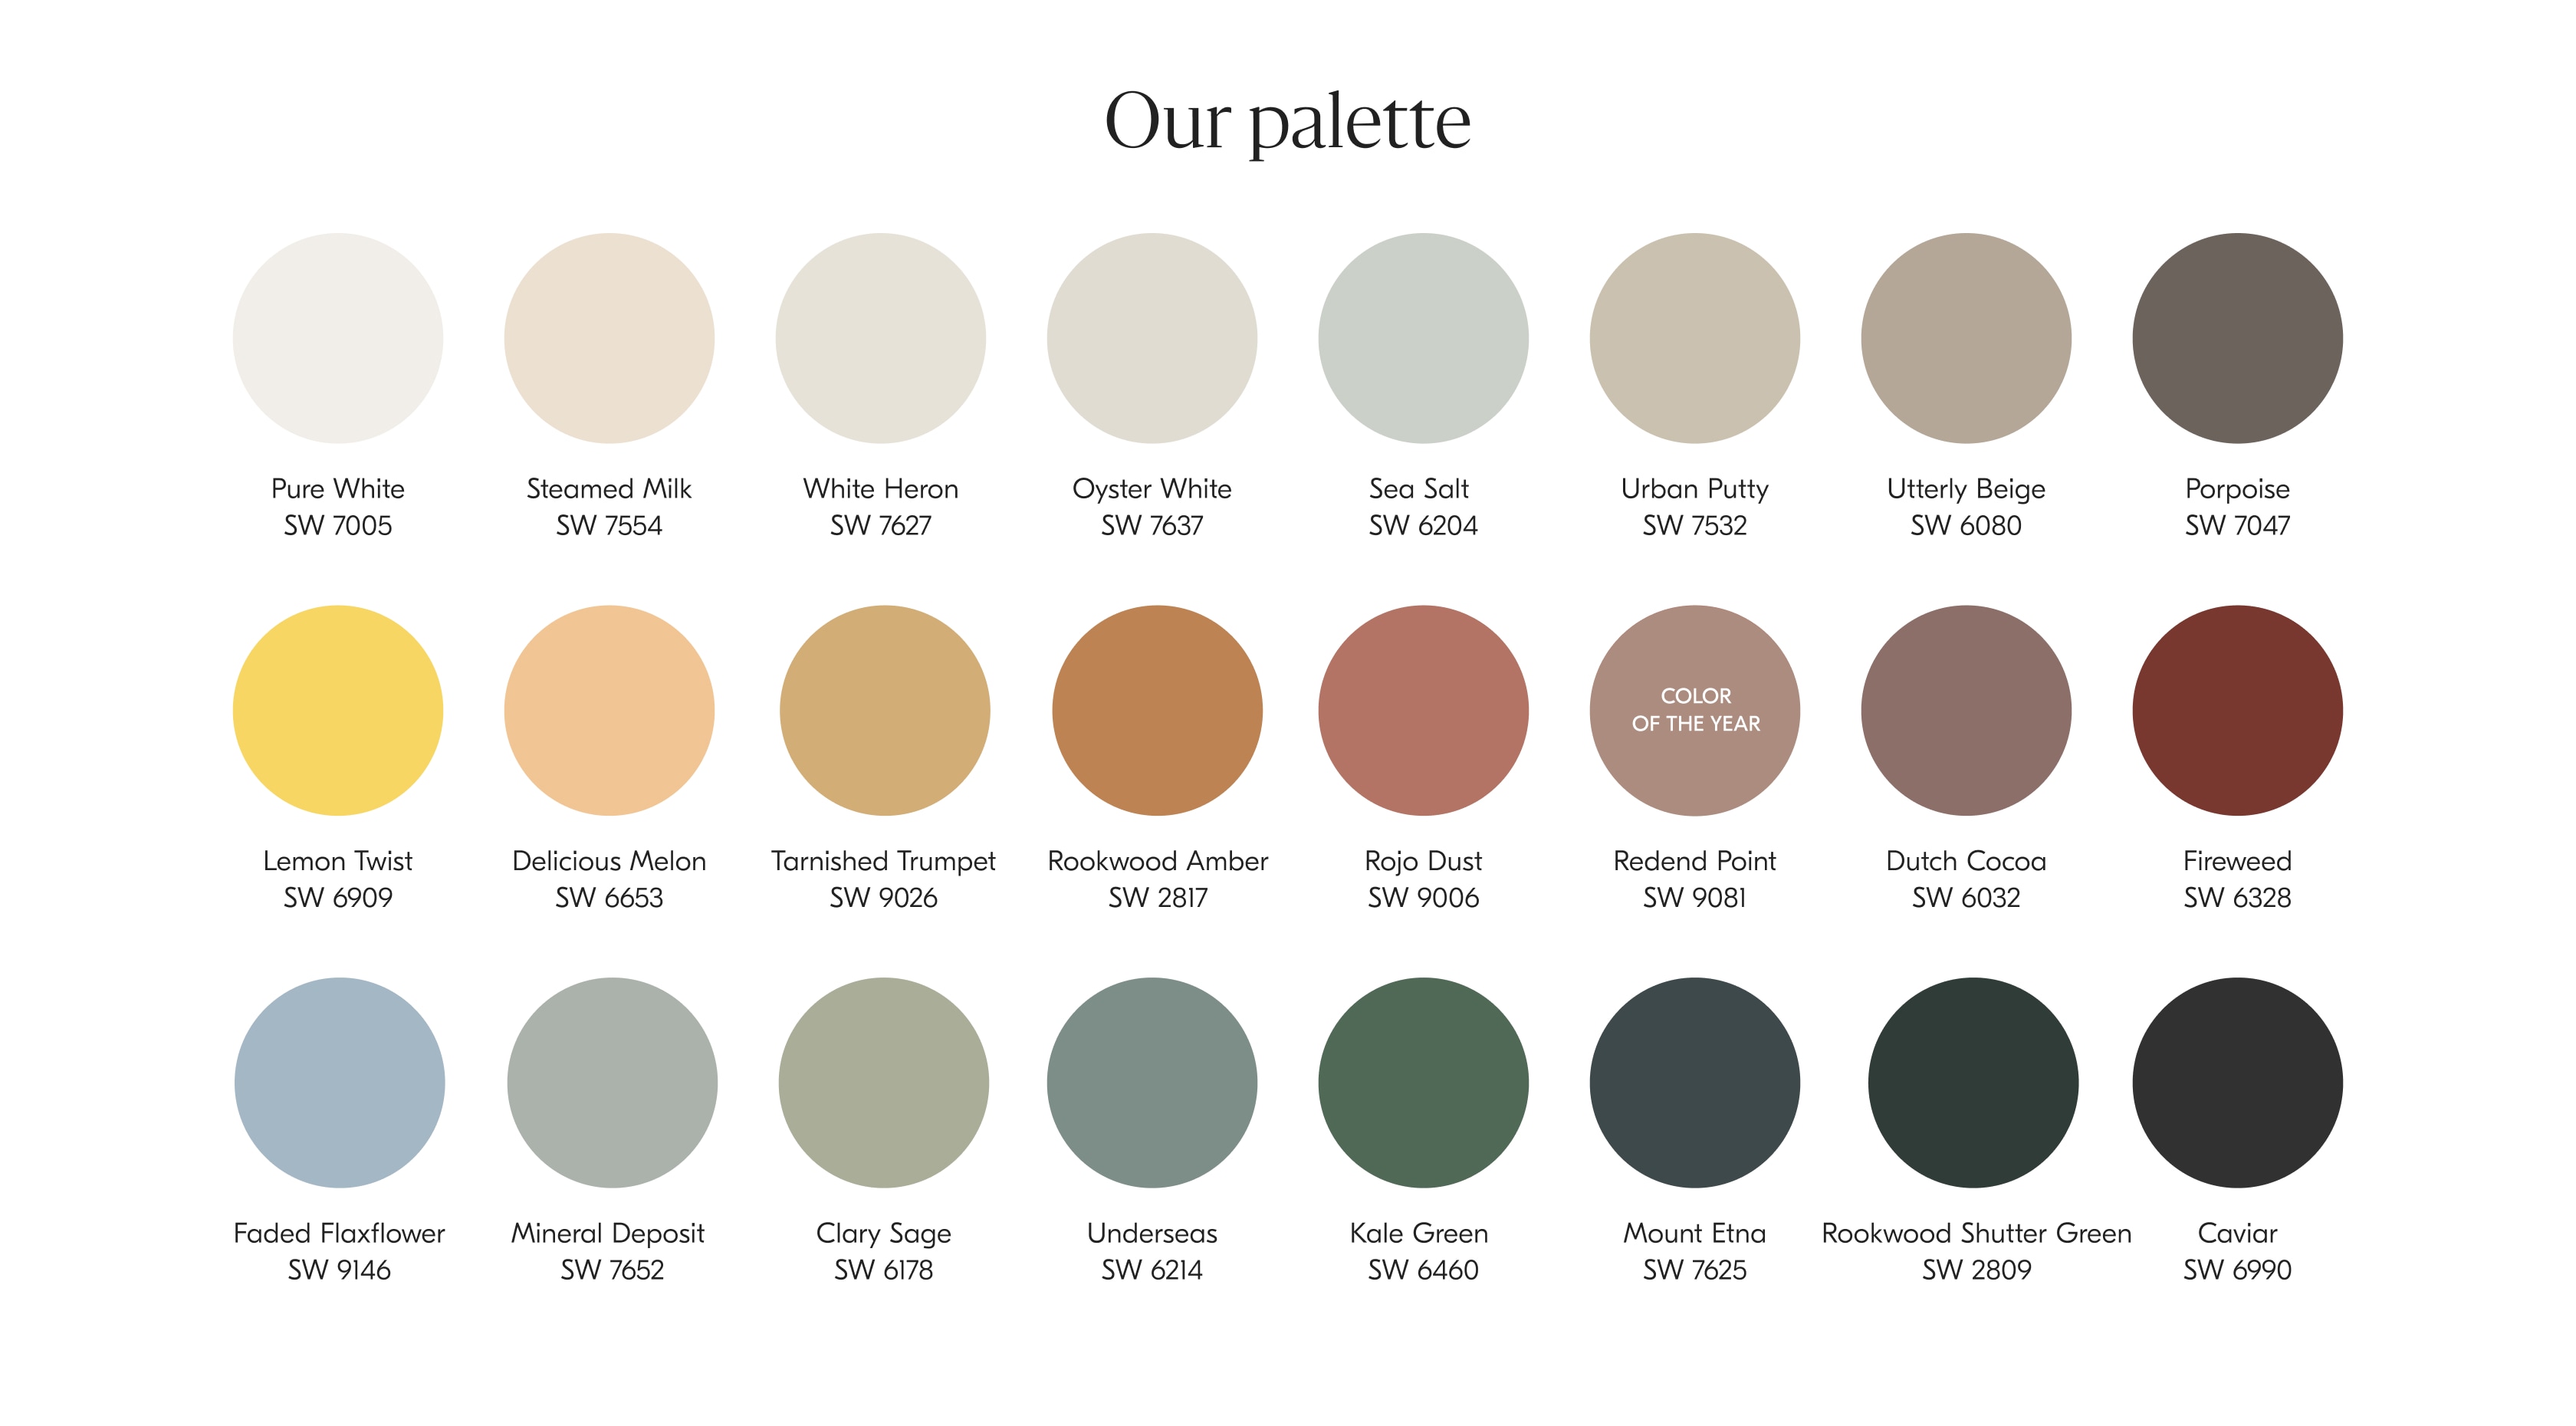 Our palette